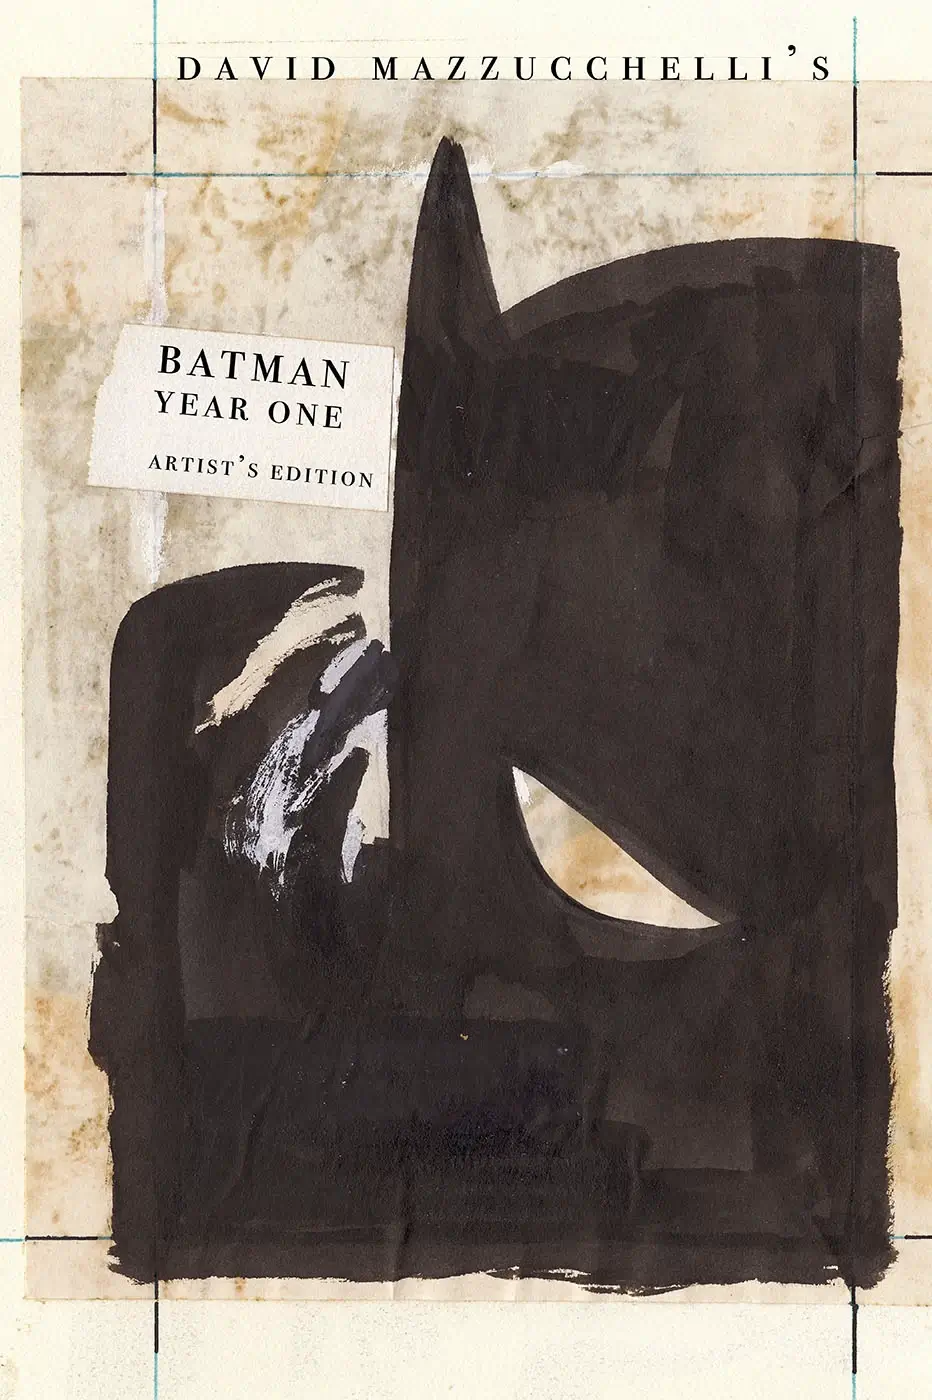 David Mazzucchellis Batman Year One Artists Edition cover prelim